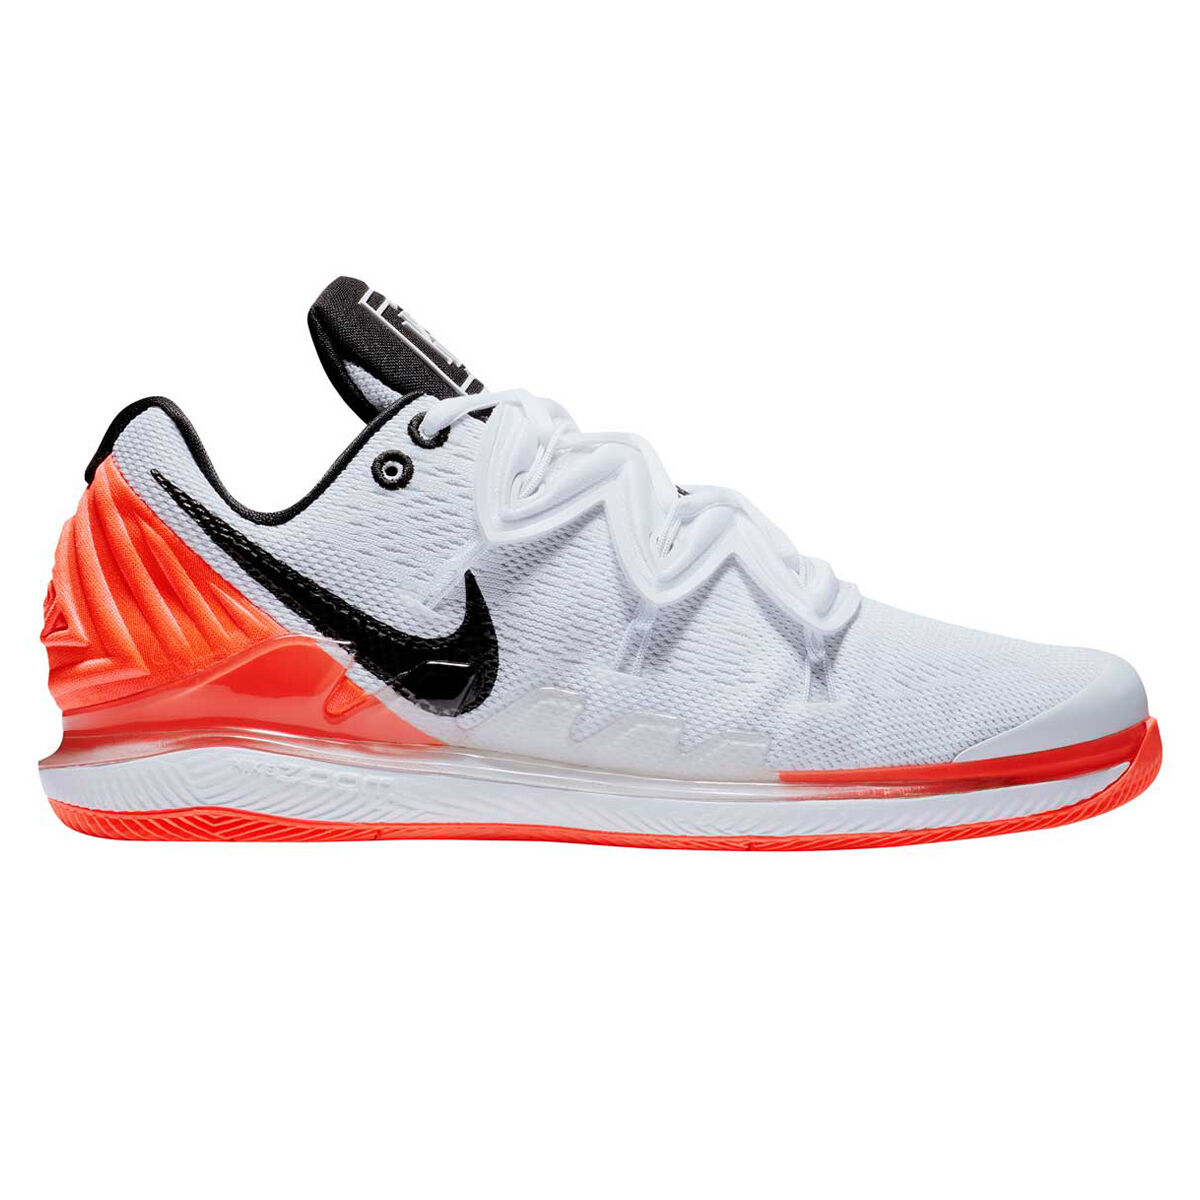 Mens fashion Basketball Shoes Nike Kyrie 5 white with orange